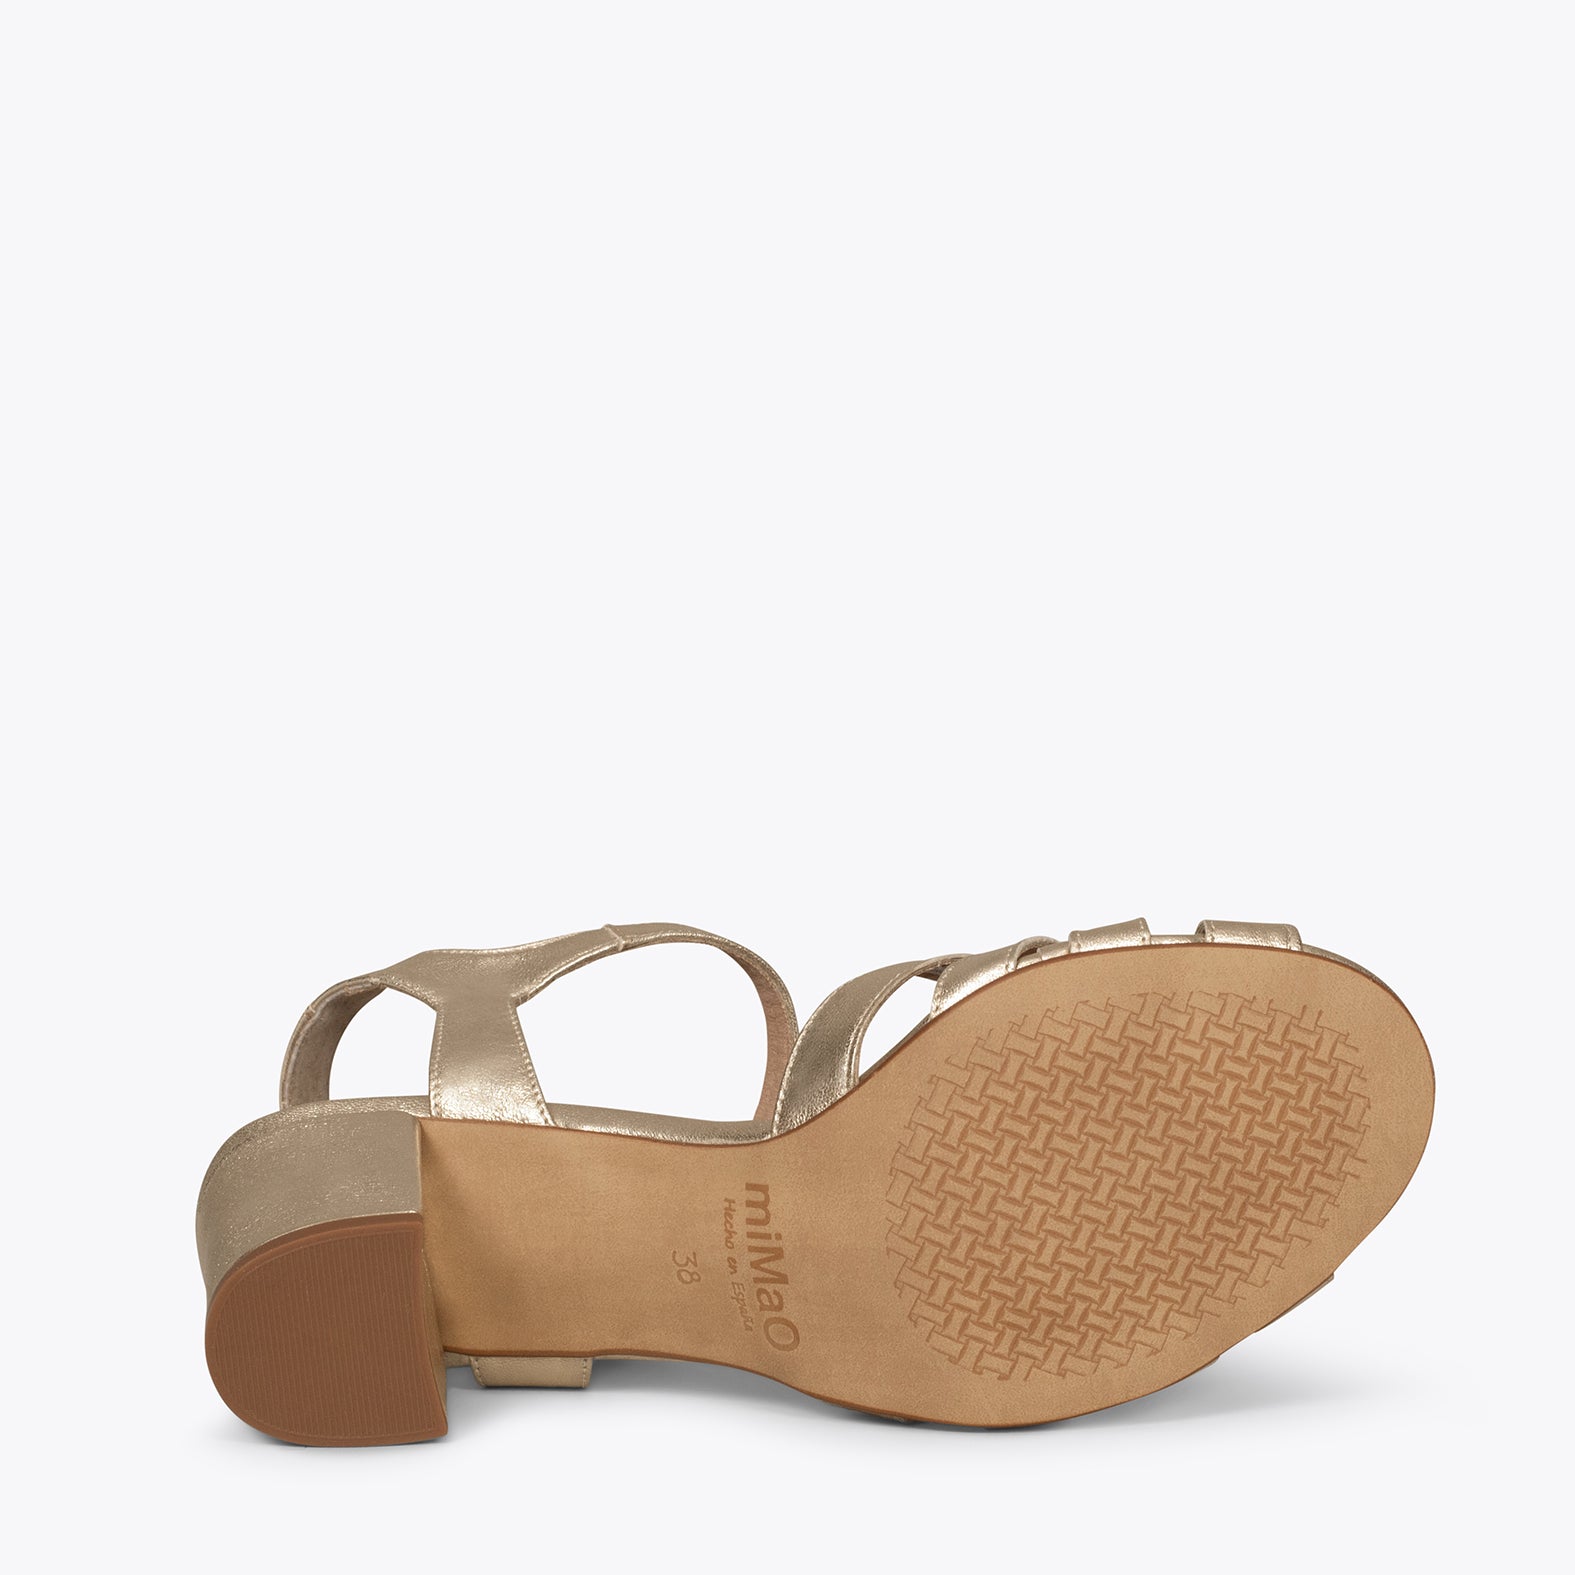 MUSE – GOLD block heel sandals